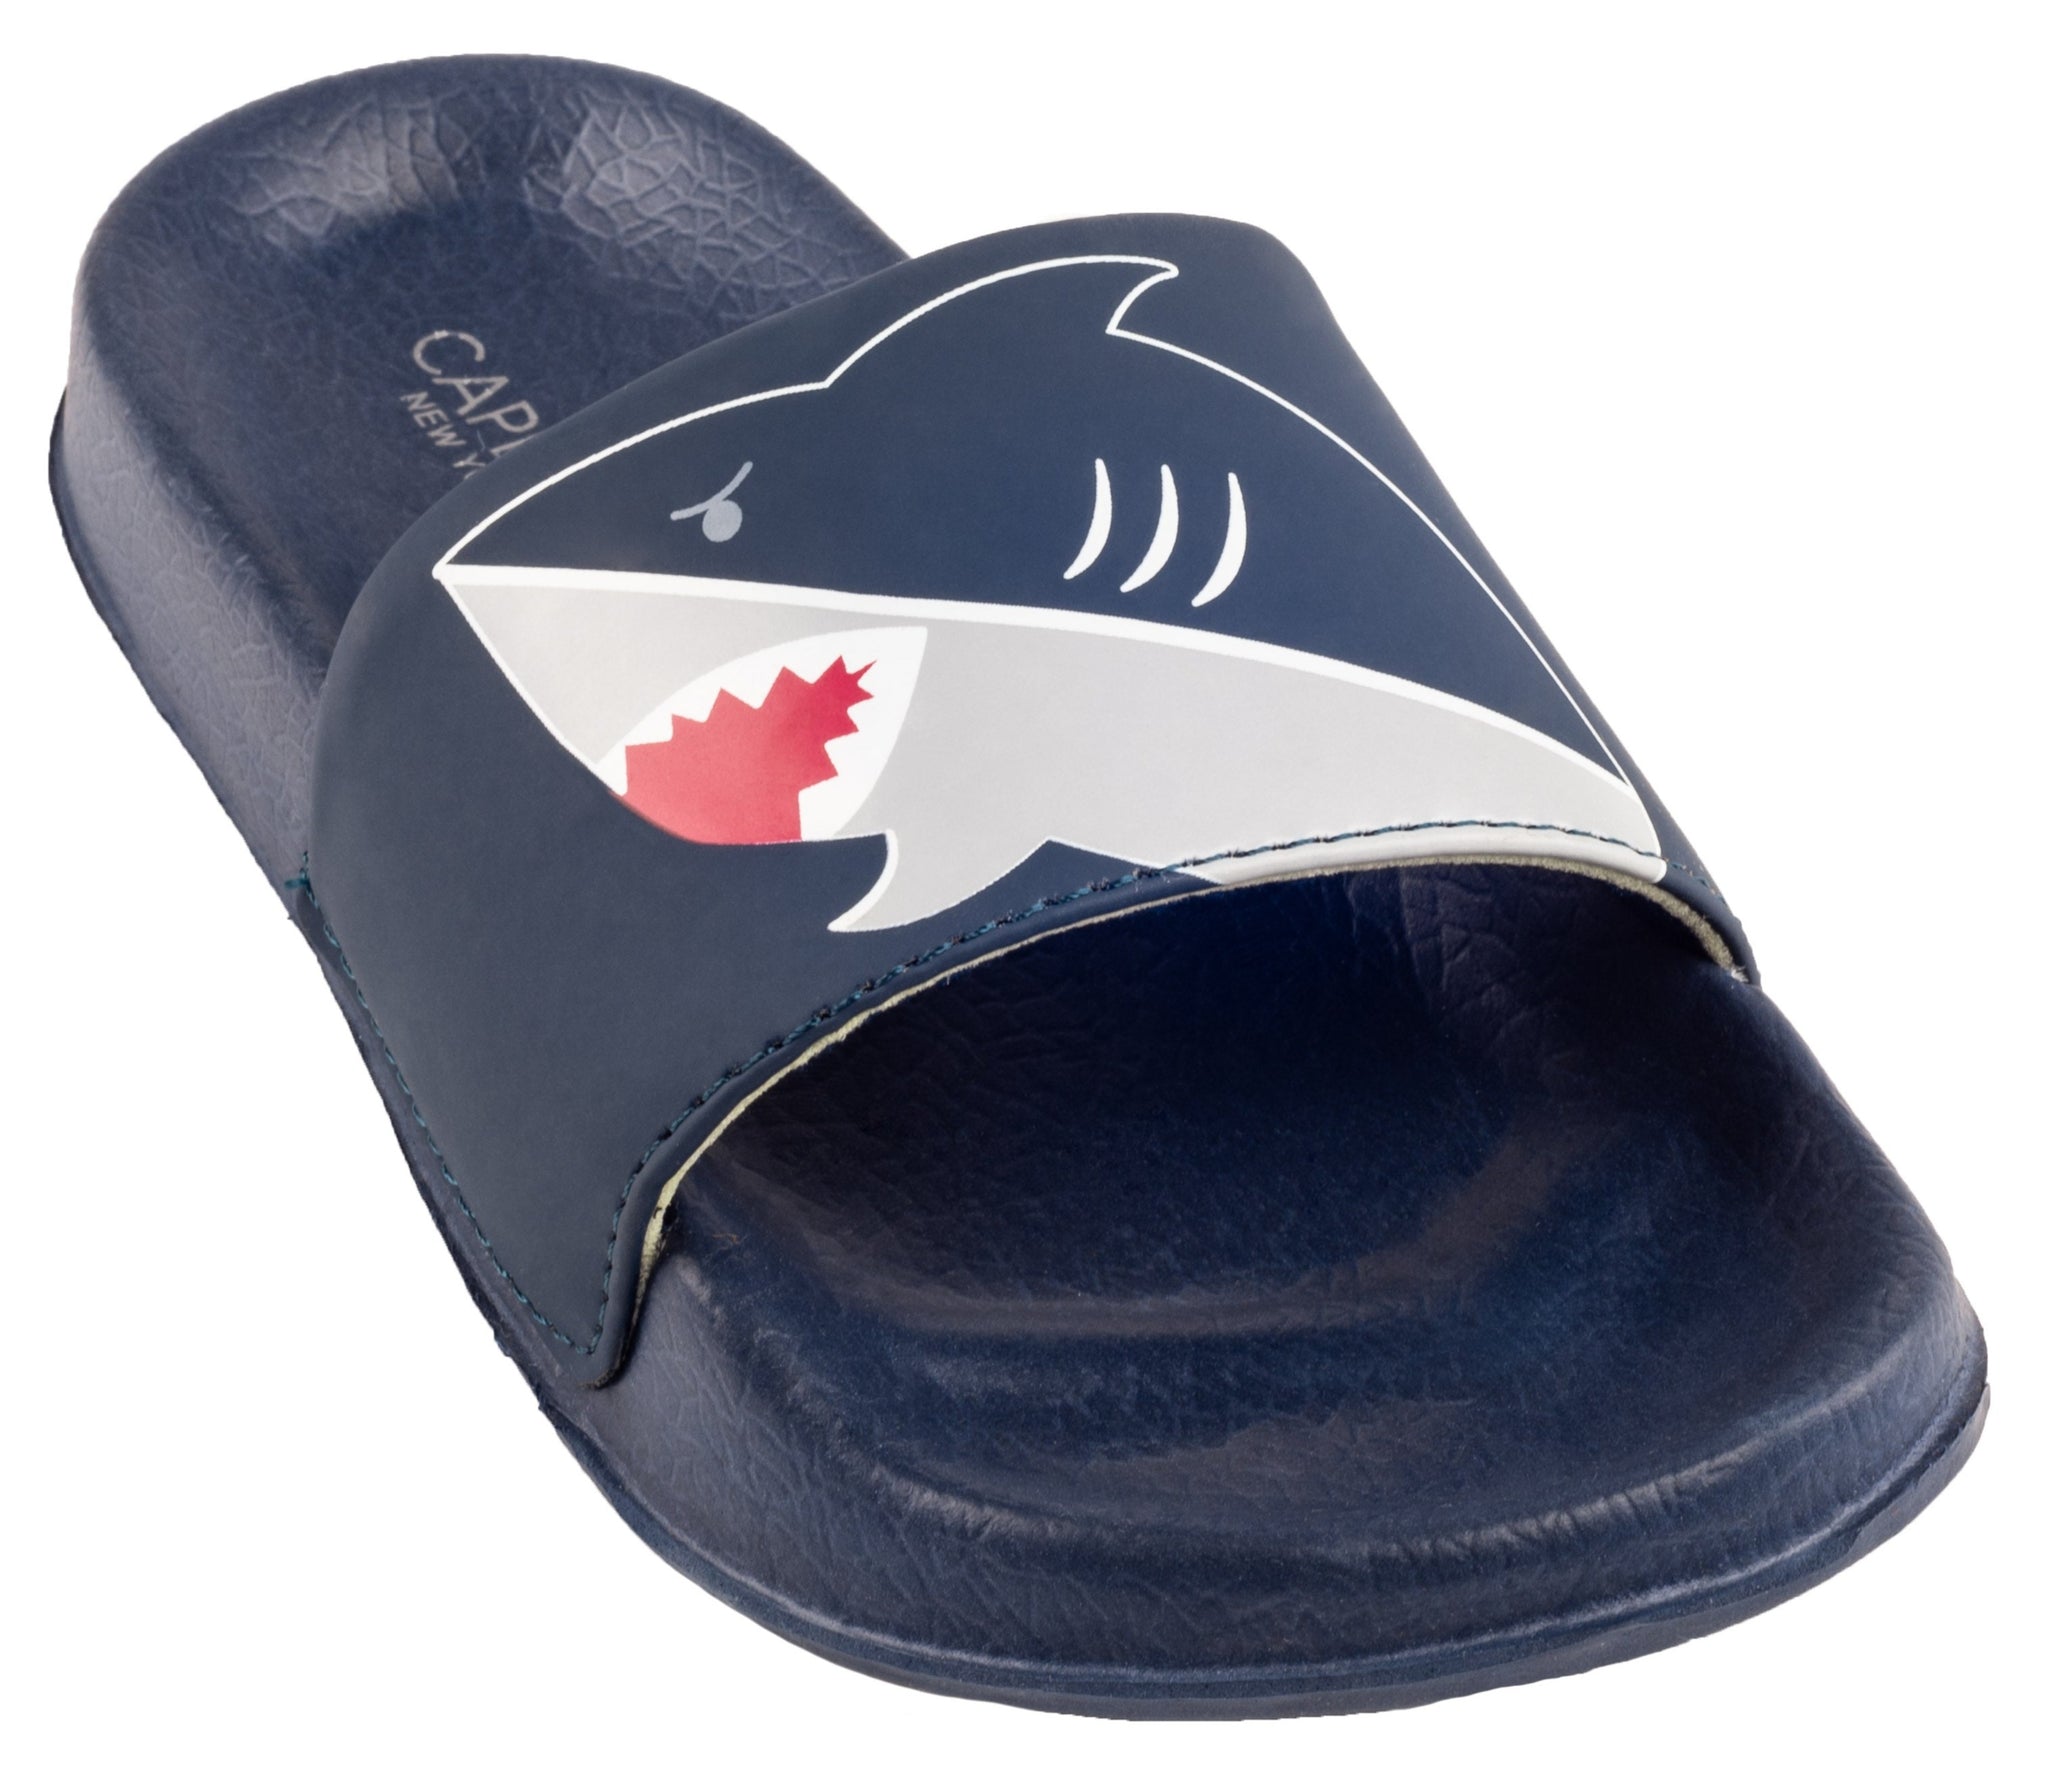 Boys Faux Leather Shark Printed Slides